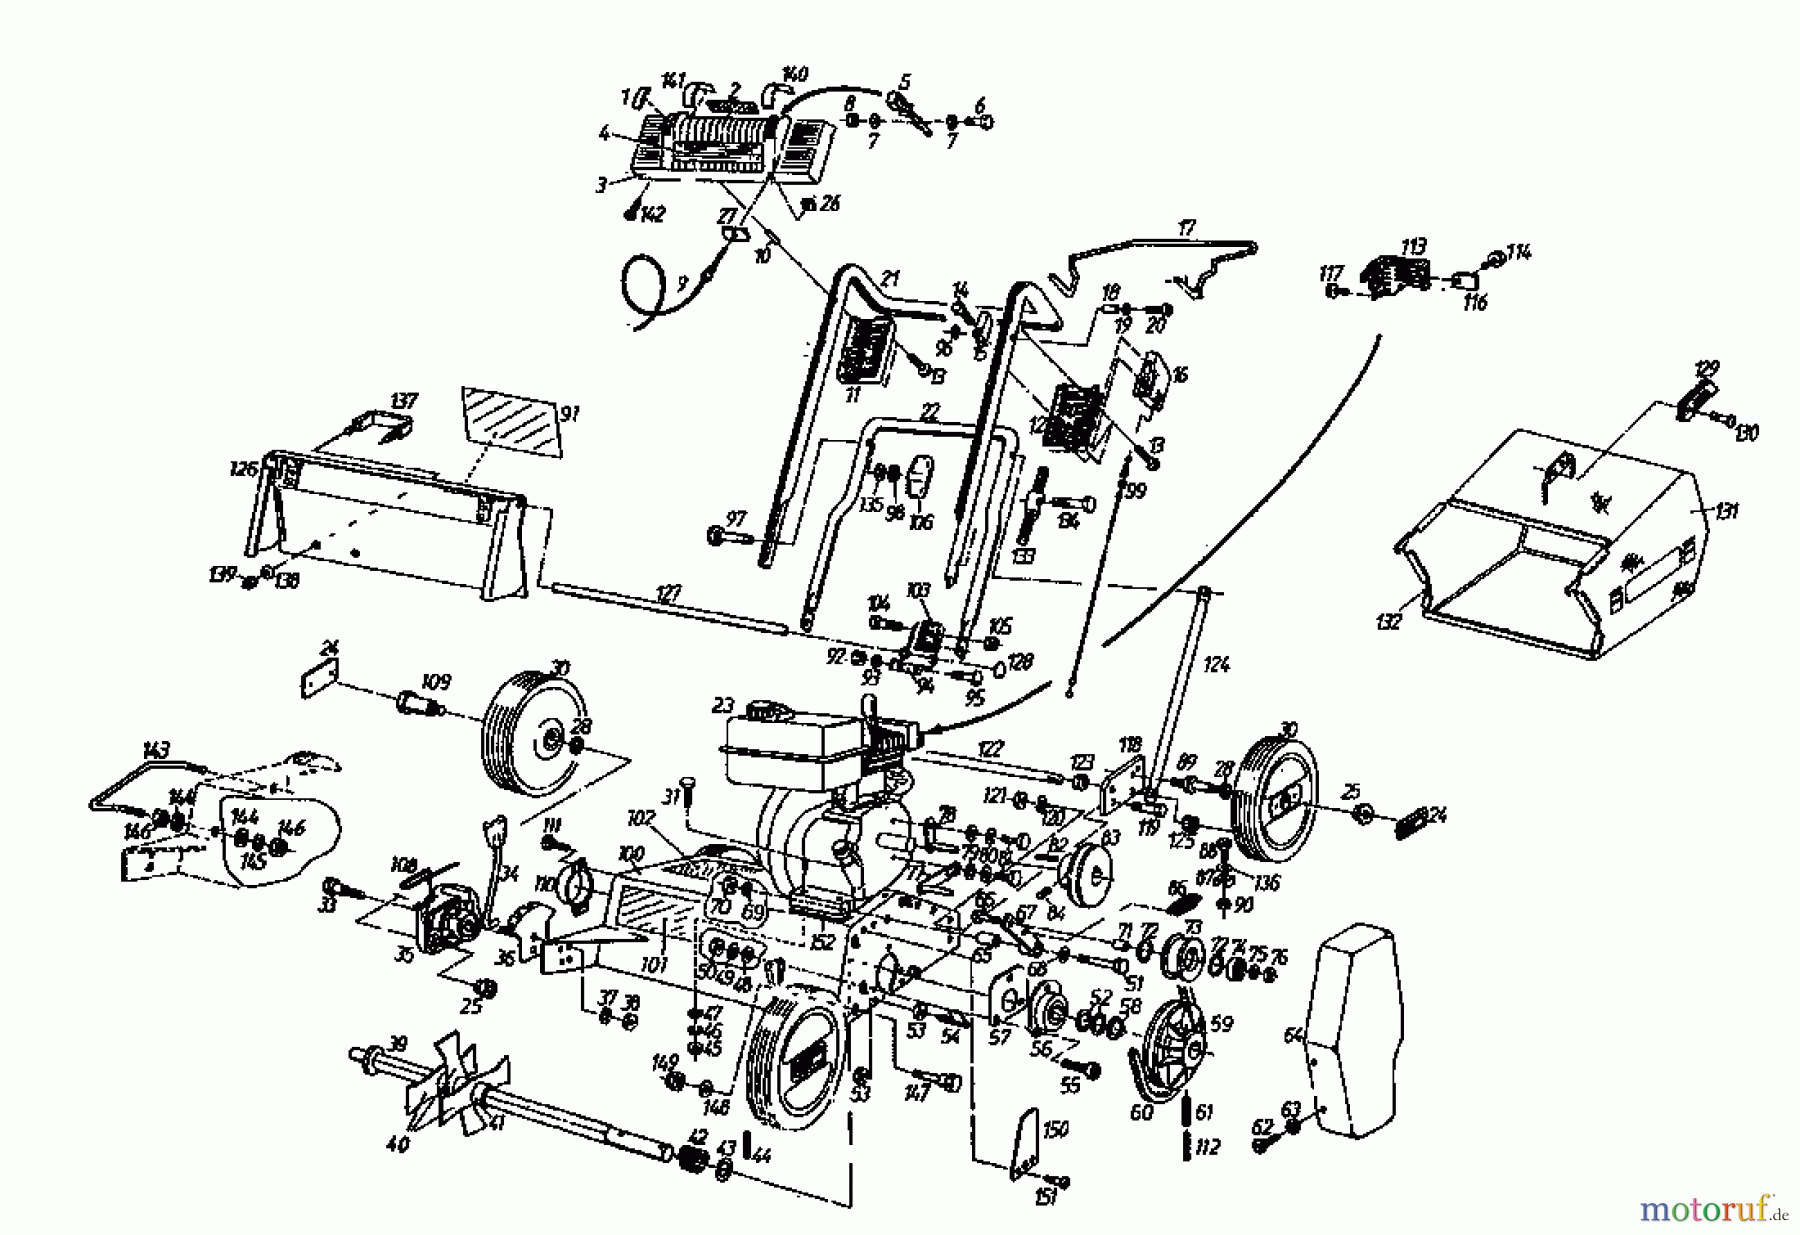  Gutbrod Petrol verticutter MV 404 04010.01  (1996) Basic machine